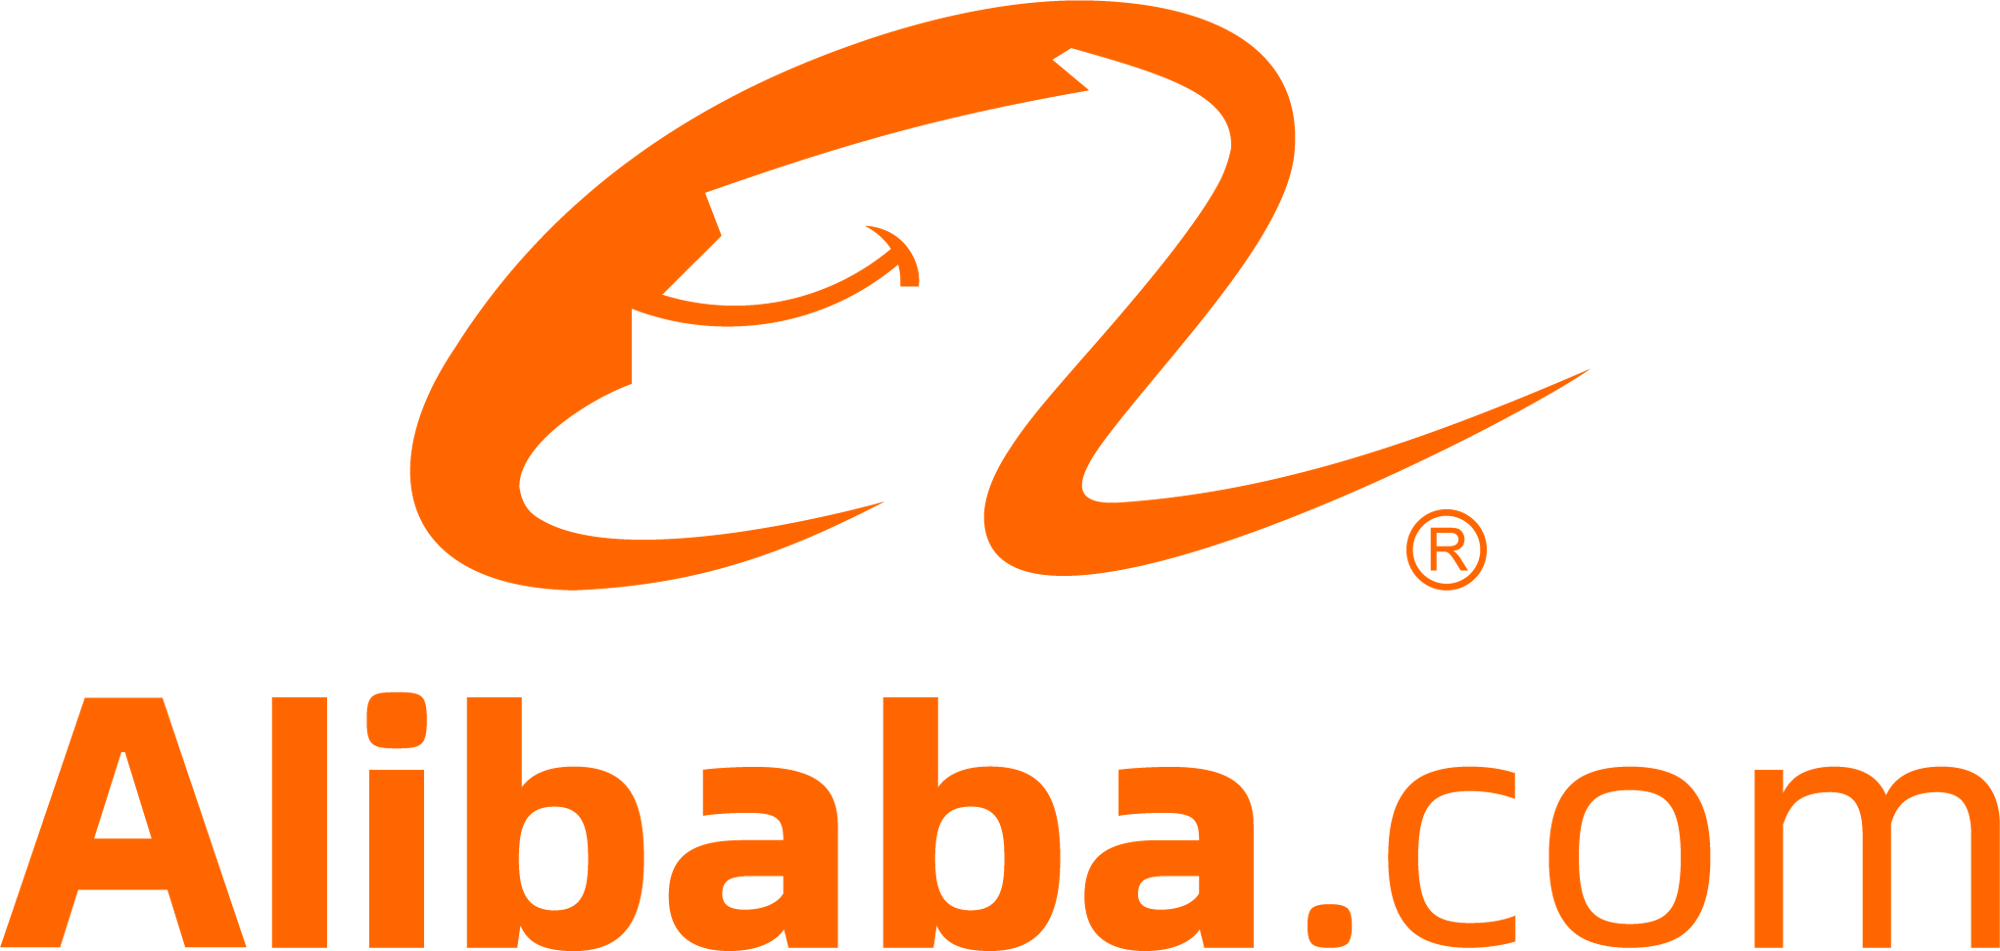 Alibaba.com_logo_Ęú°æģČ - ļąąū